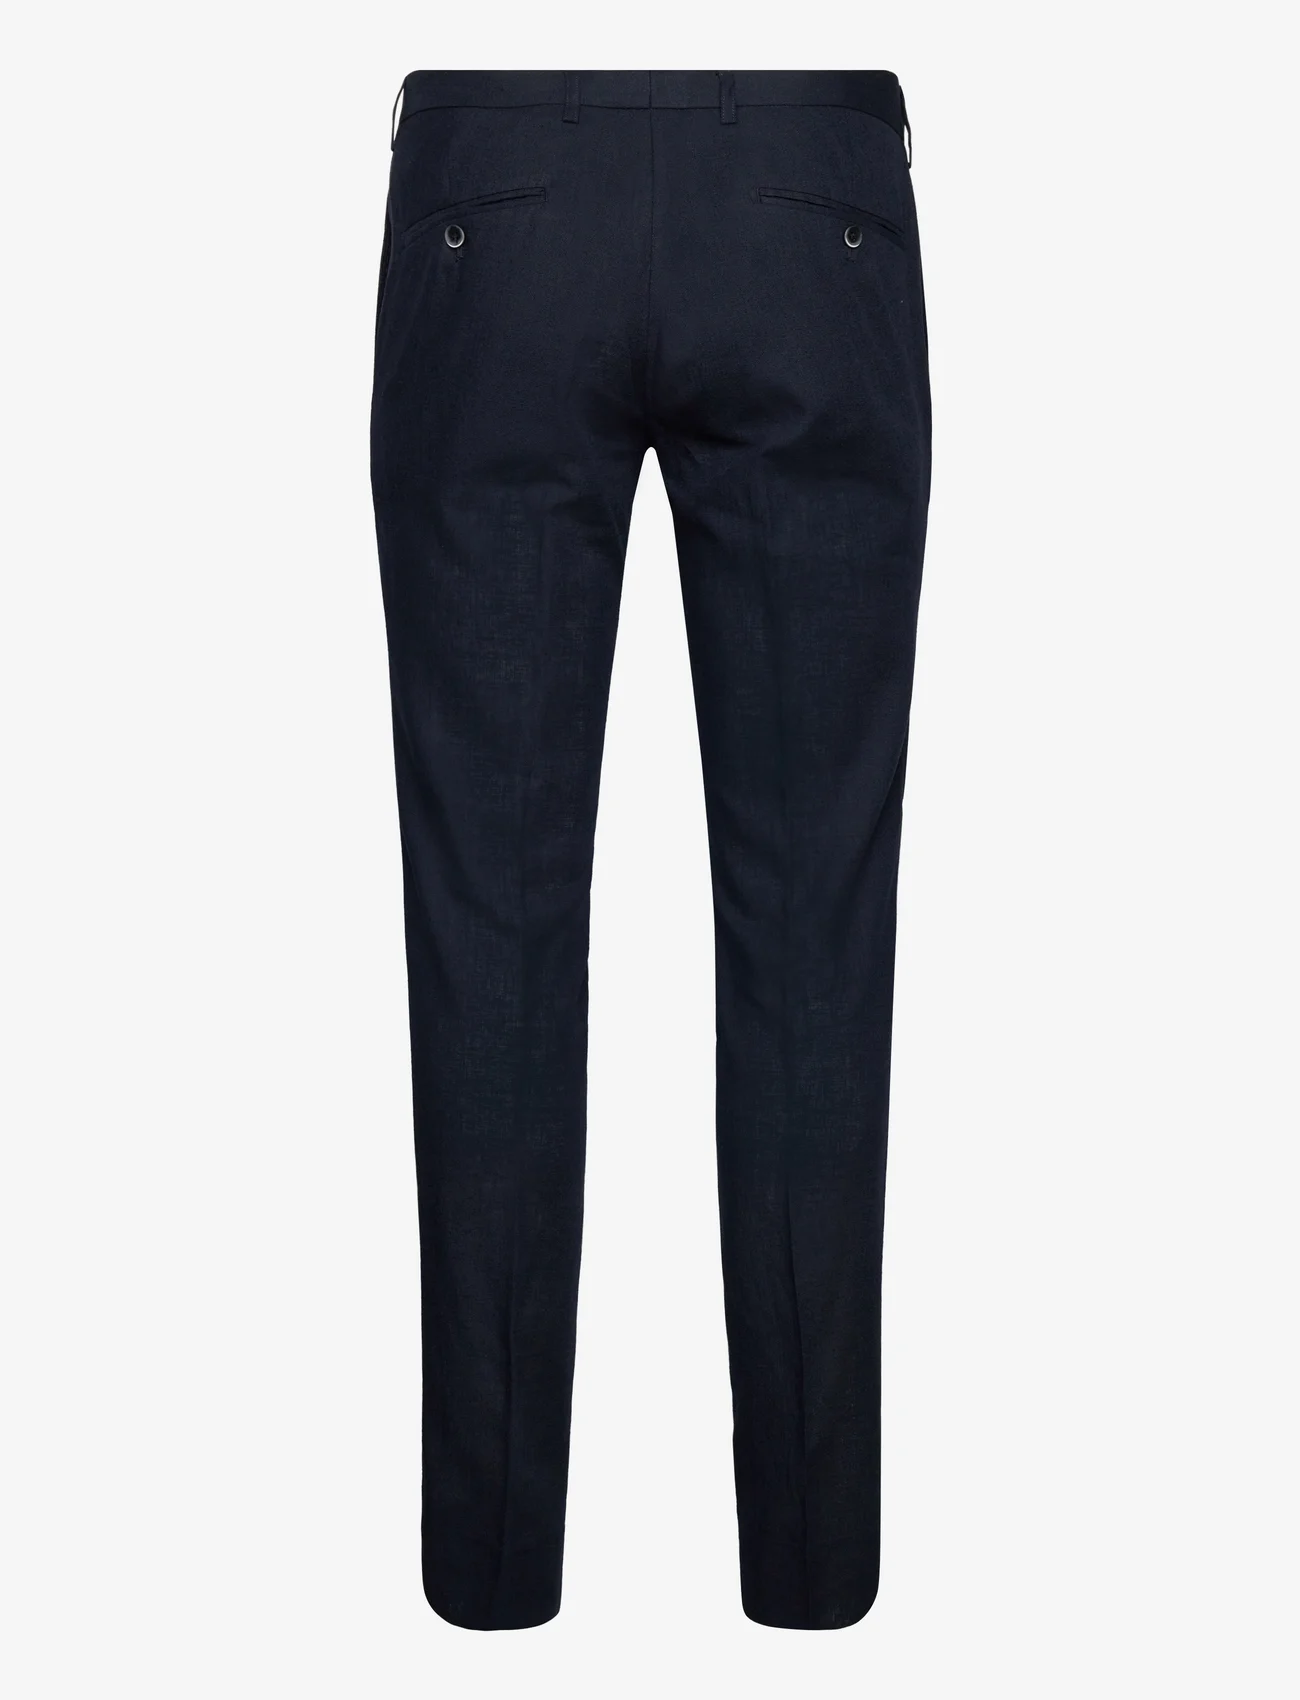 Bruun & Stengade - BS Pollino Classic Fit Suit Pants - linbukser - navy - 1